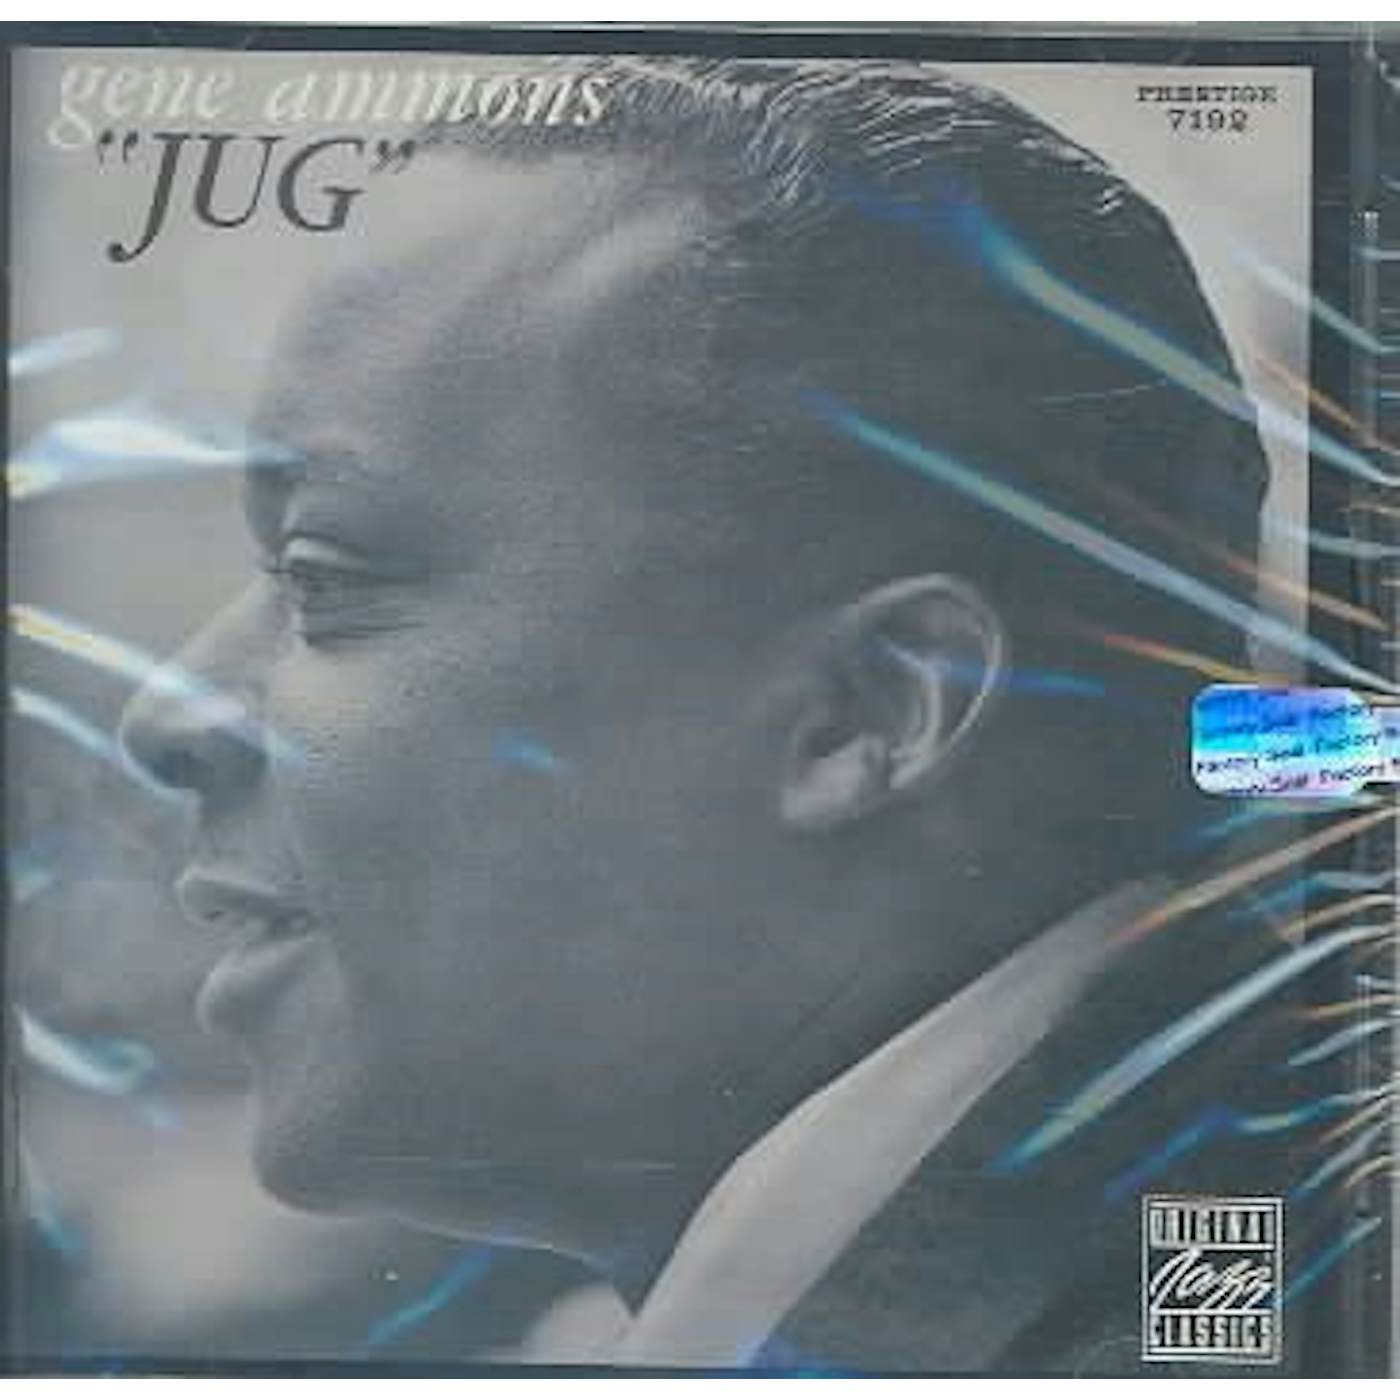 Gene Ammons Jug CD